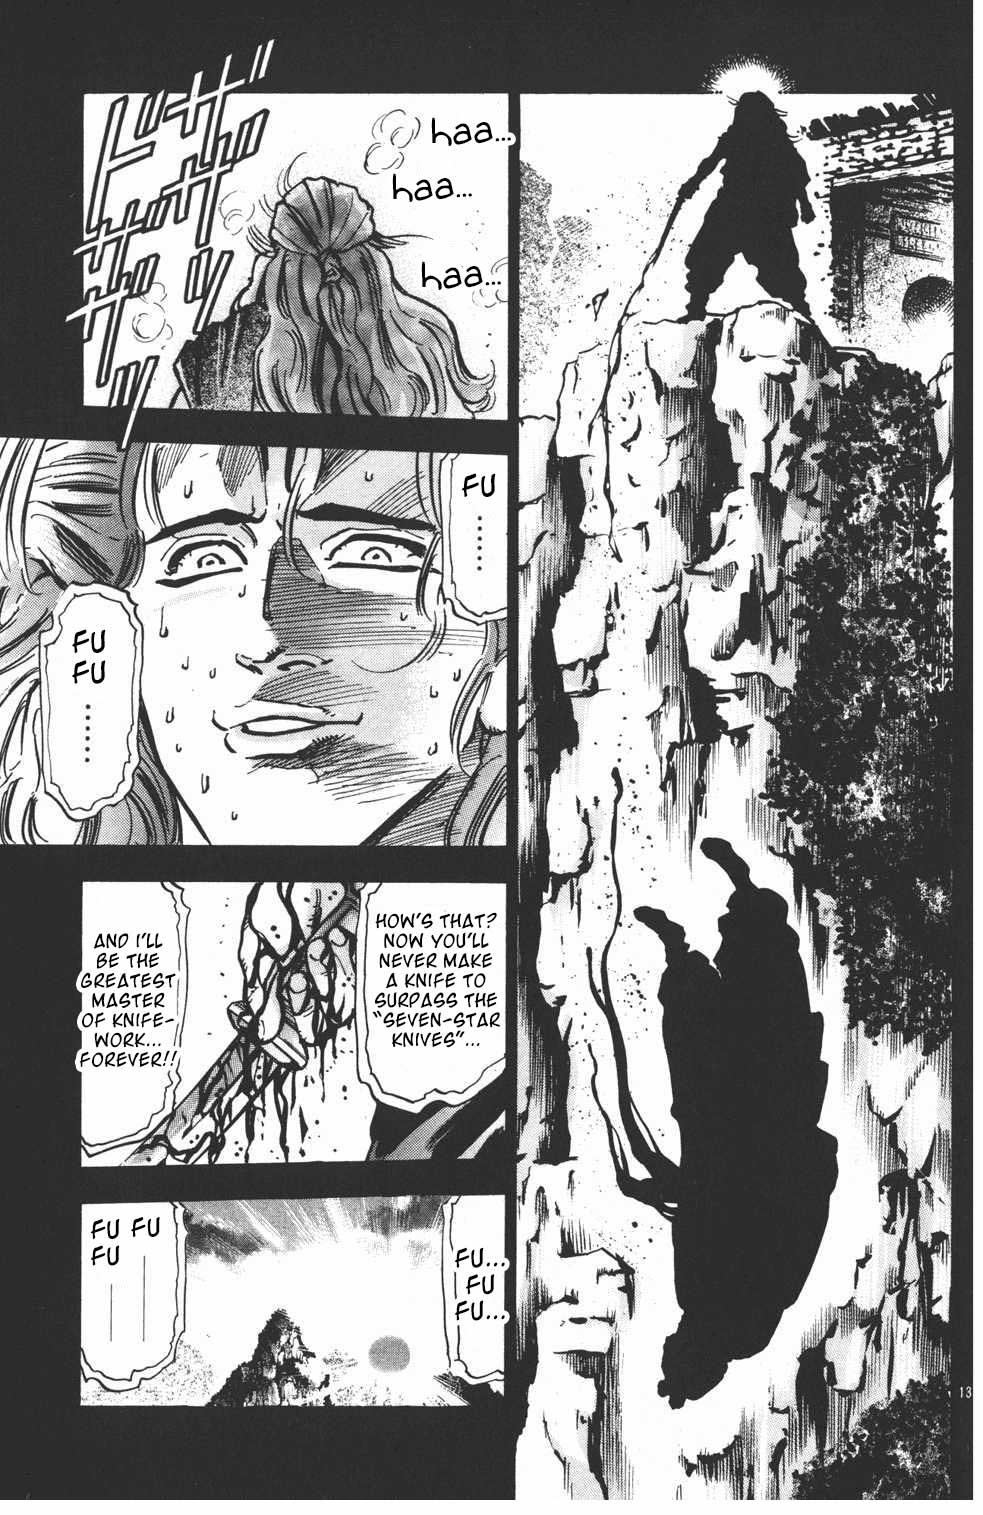 Shin Chuuka Ichiban! Vol. 5 Ch. 39 The "Seven Star Knives" of Destiny